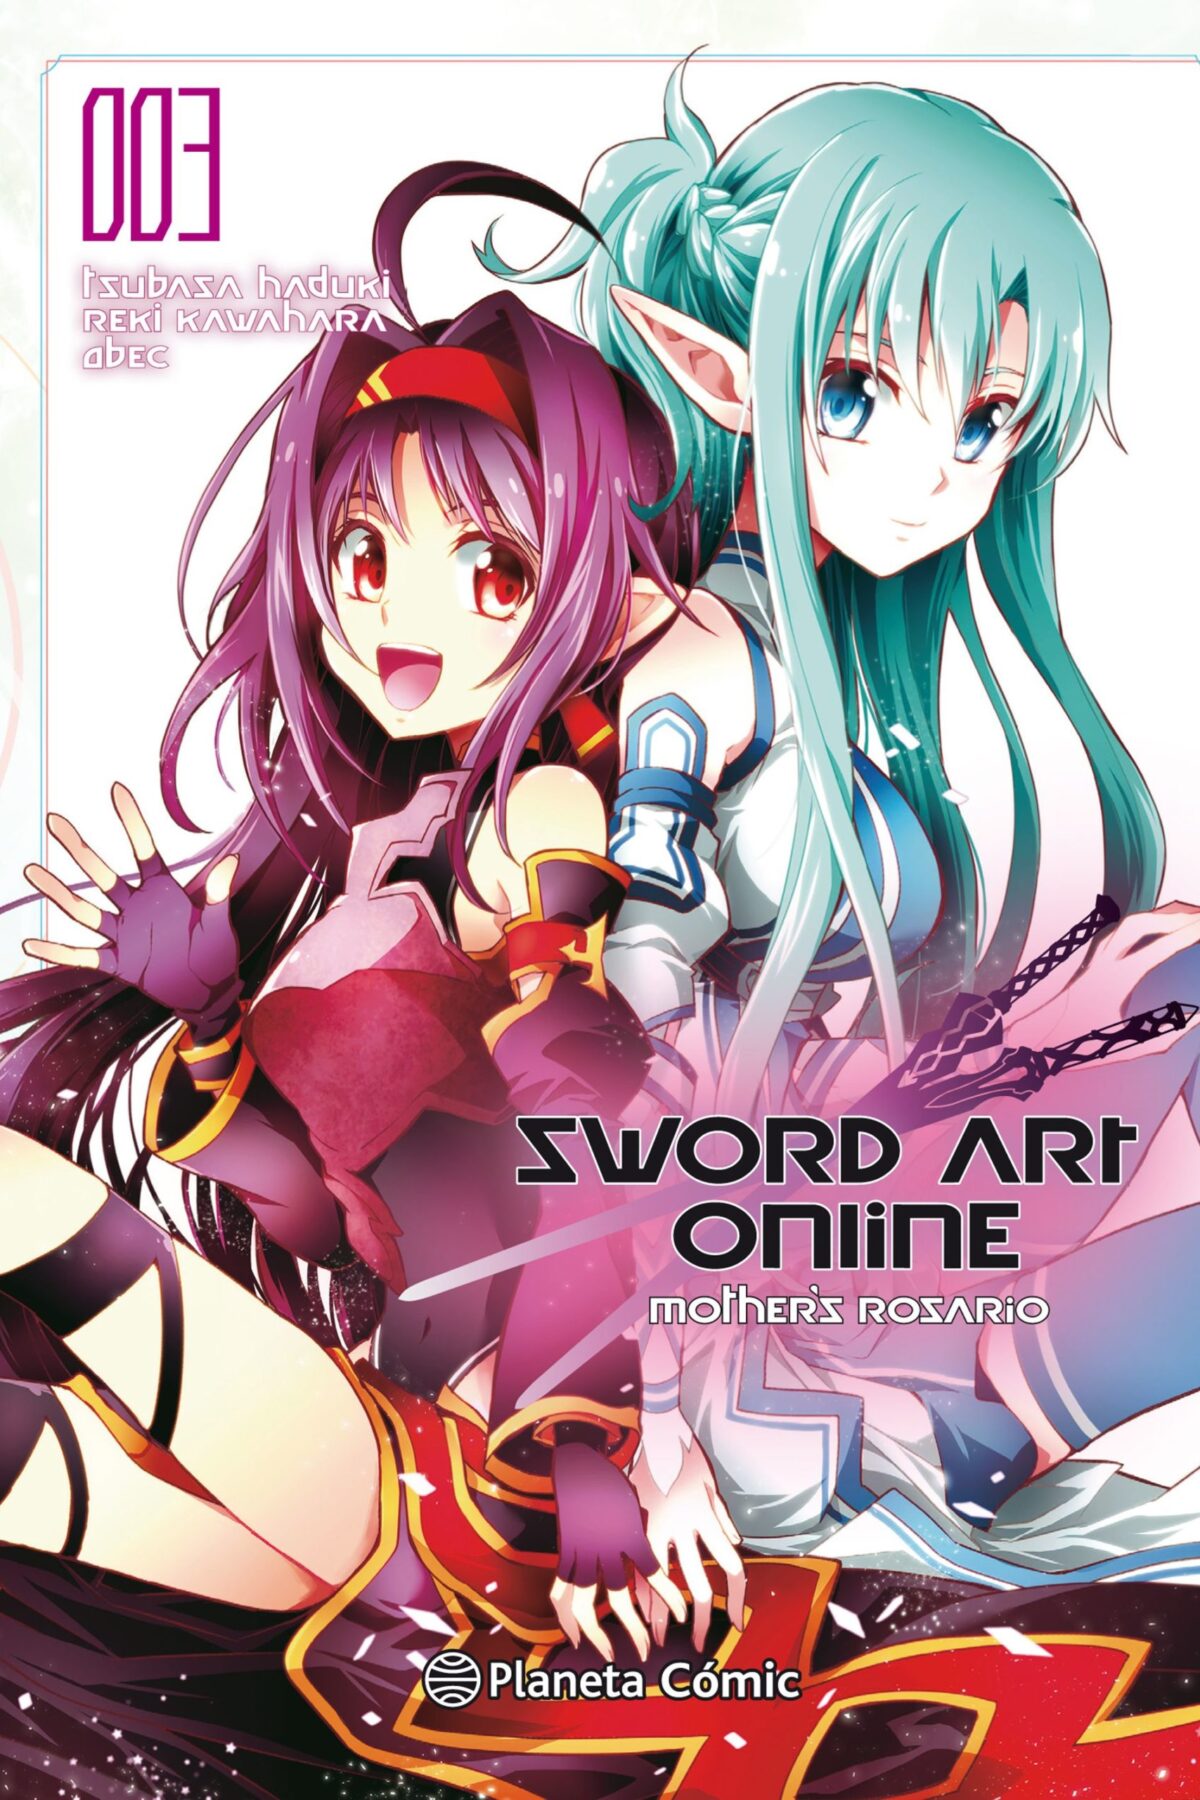 Manga Sword Art Online Mother's Rosario 003